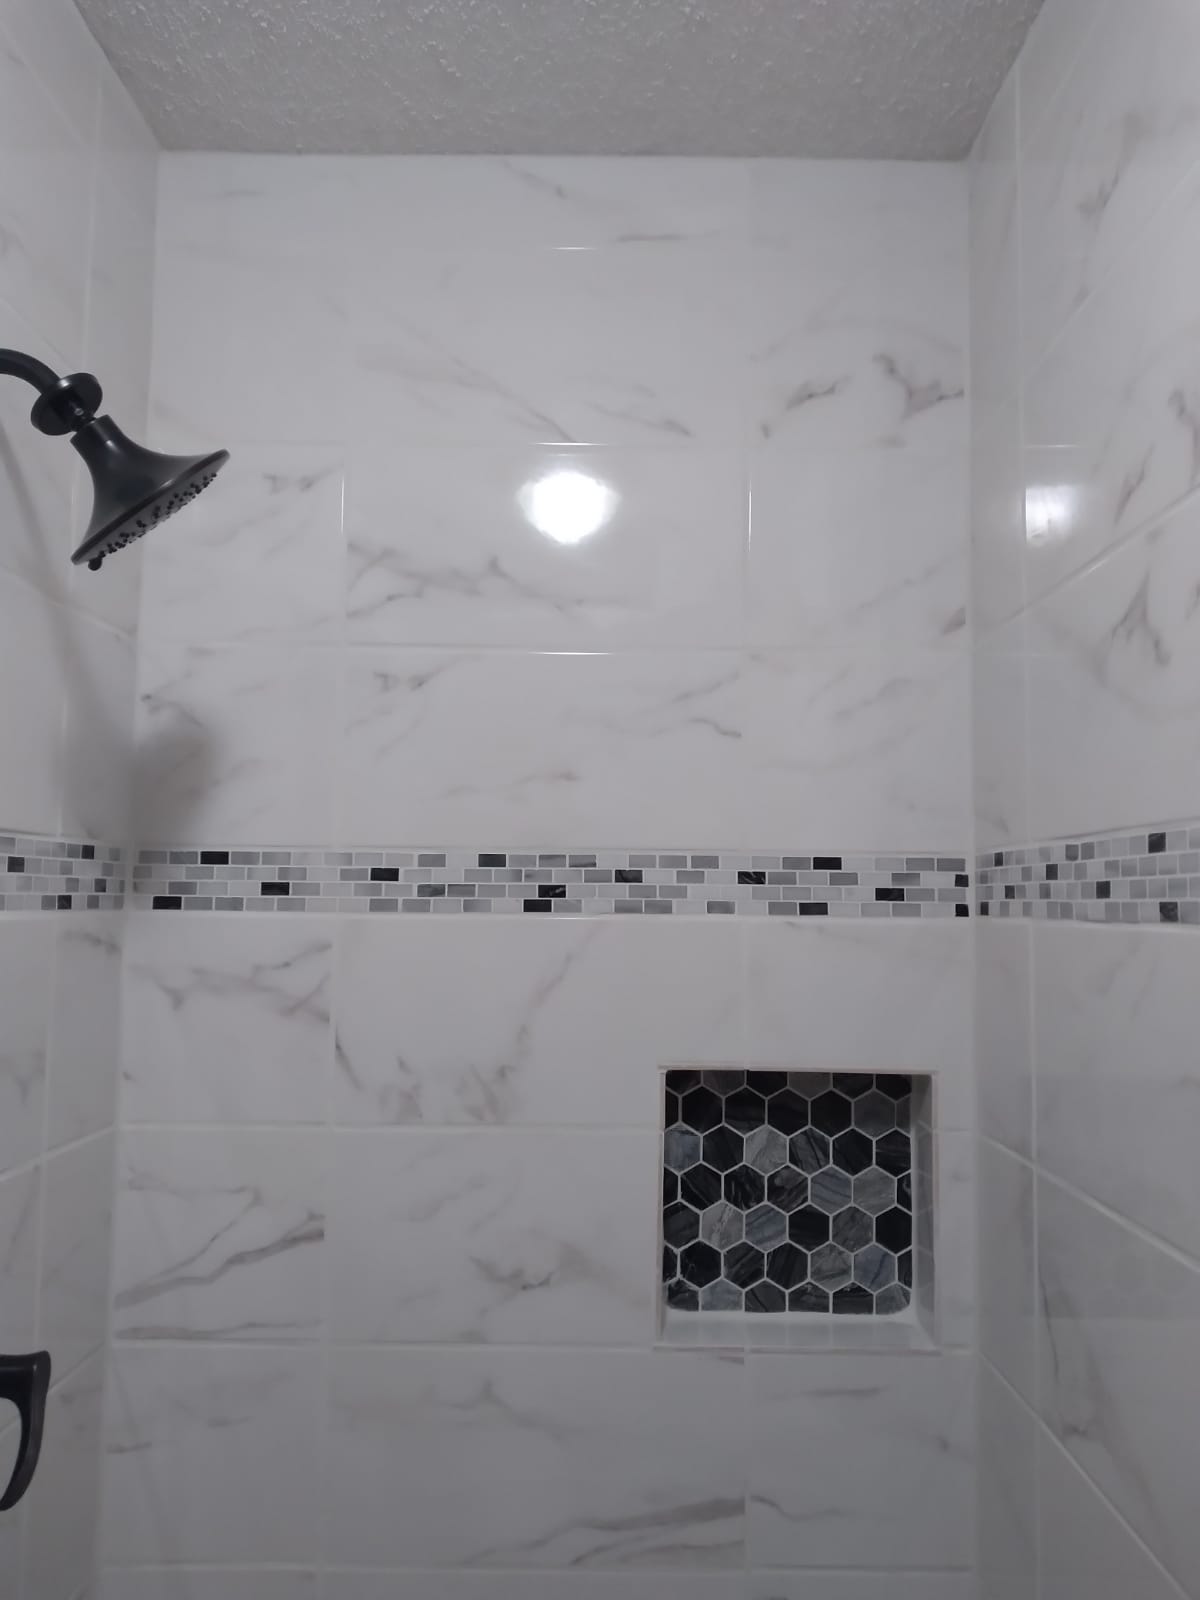 Tile work bathroom